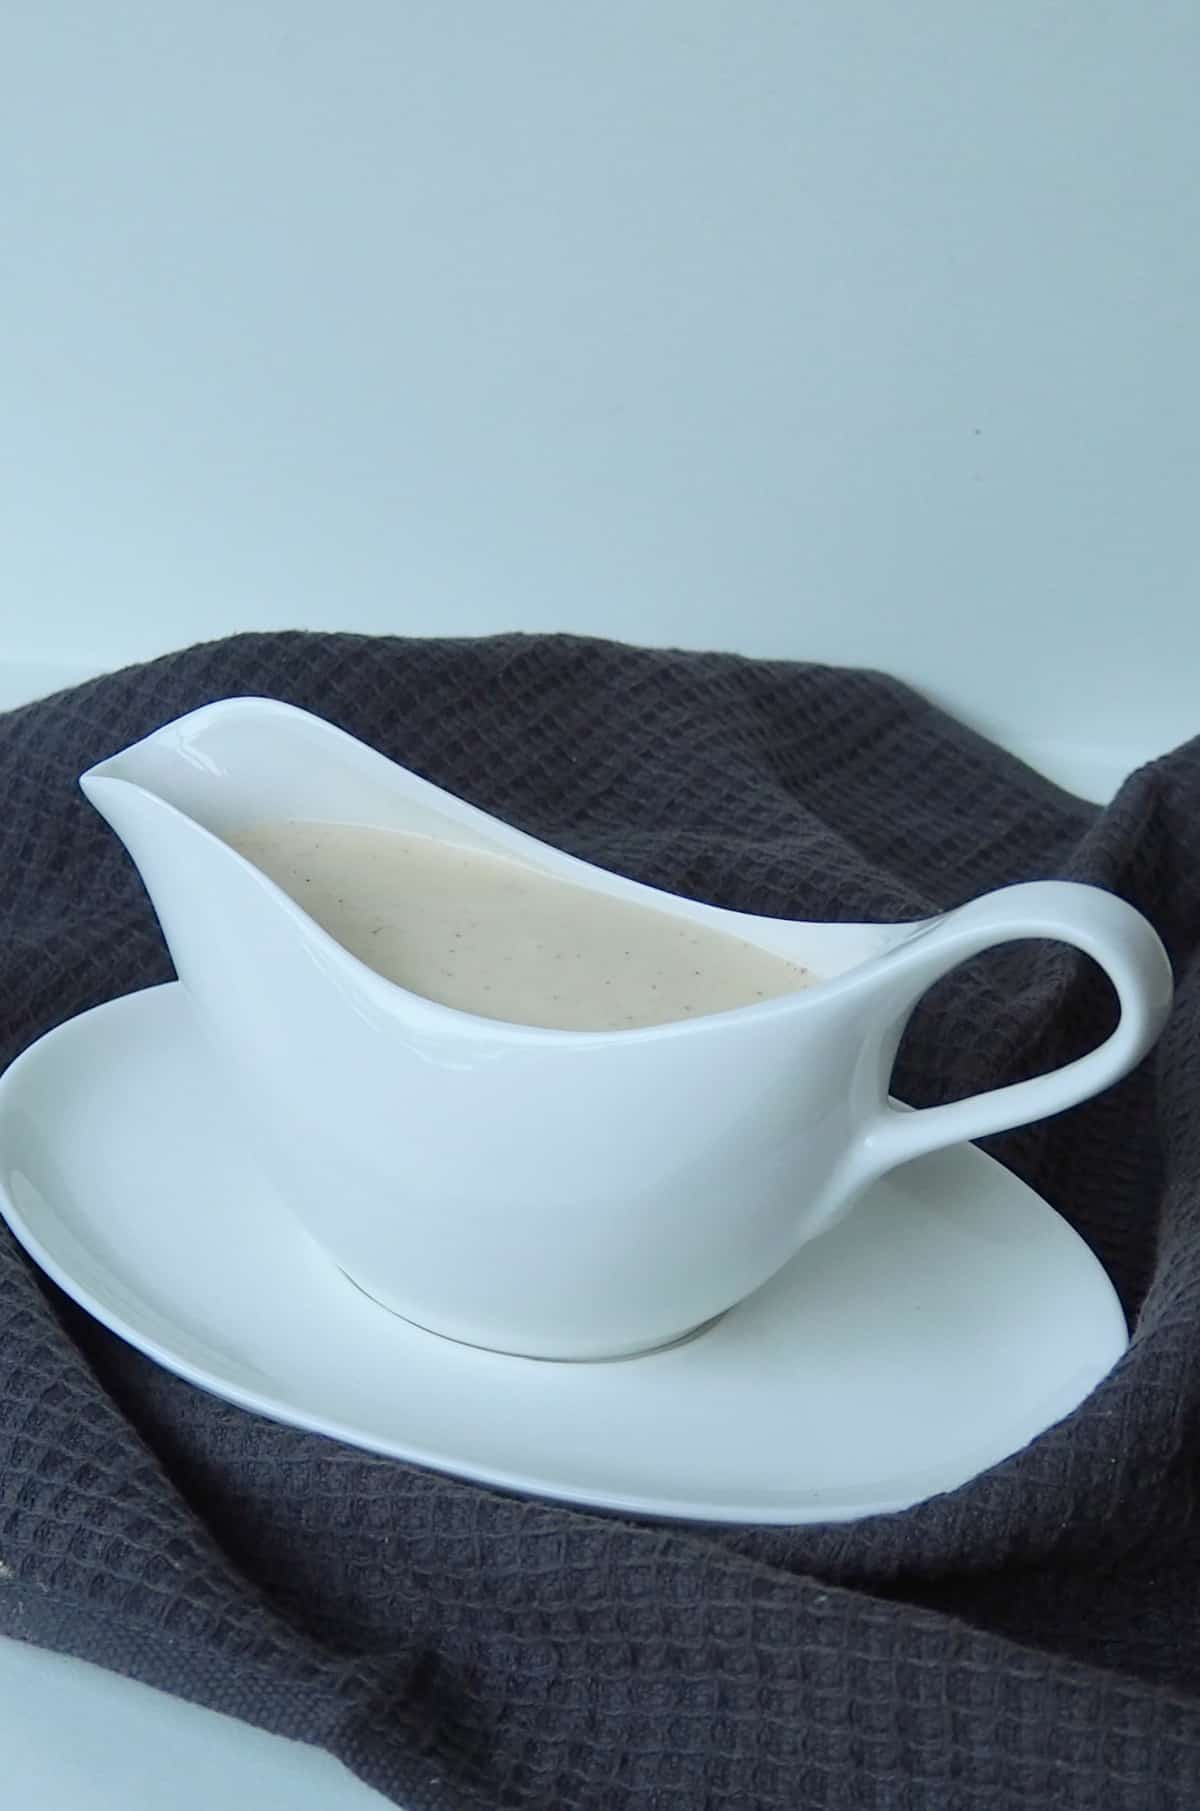 Cheese sauce in a white jug on a dark grey tea towel.